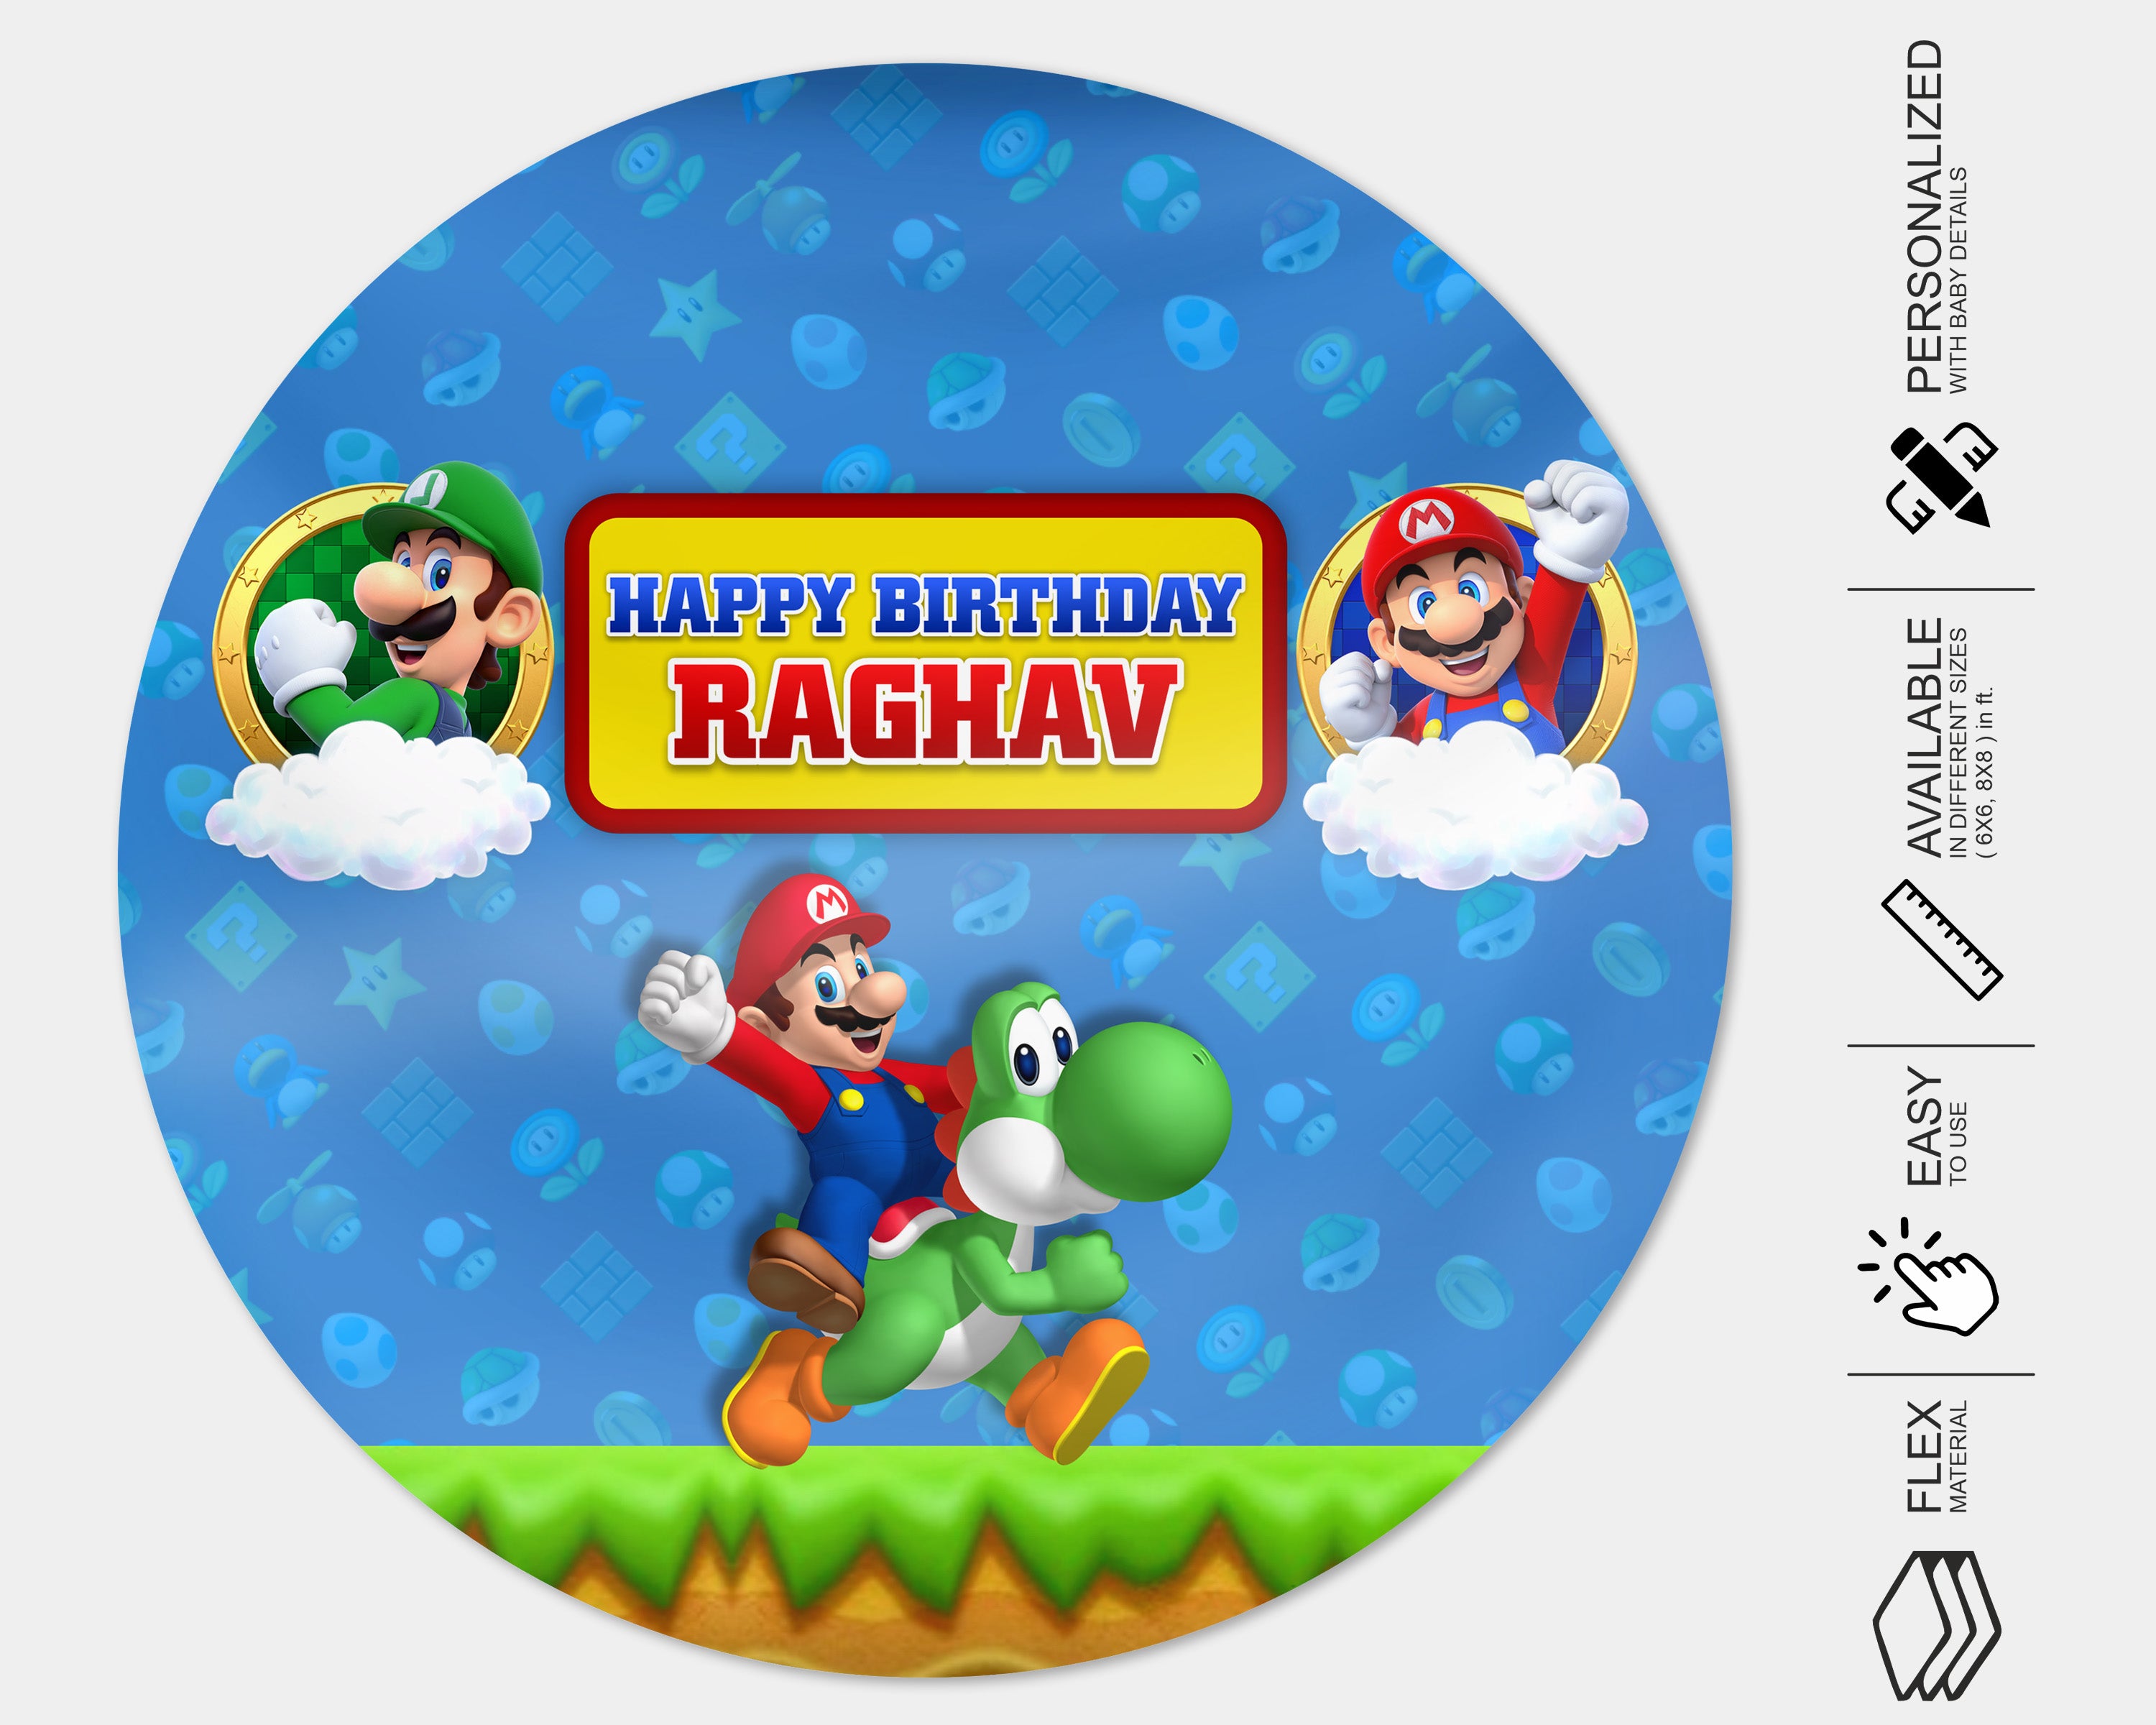 PSI Super Mario Theme Customized  Backdrop